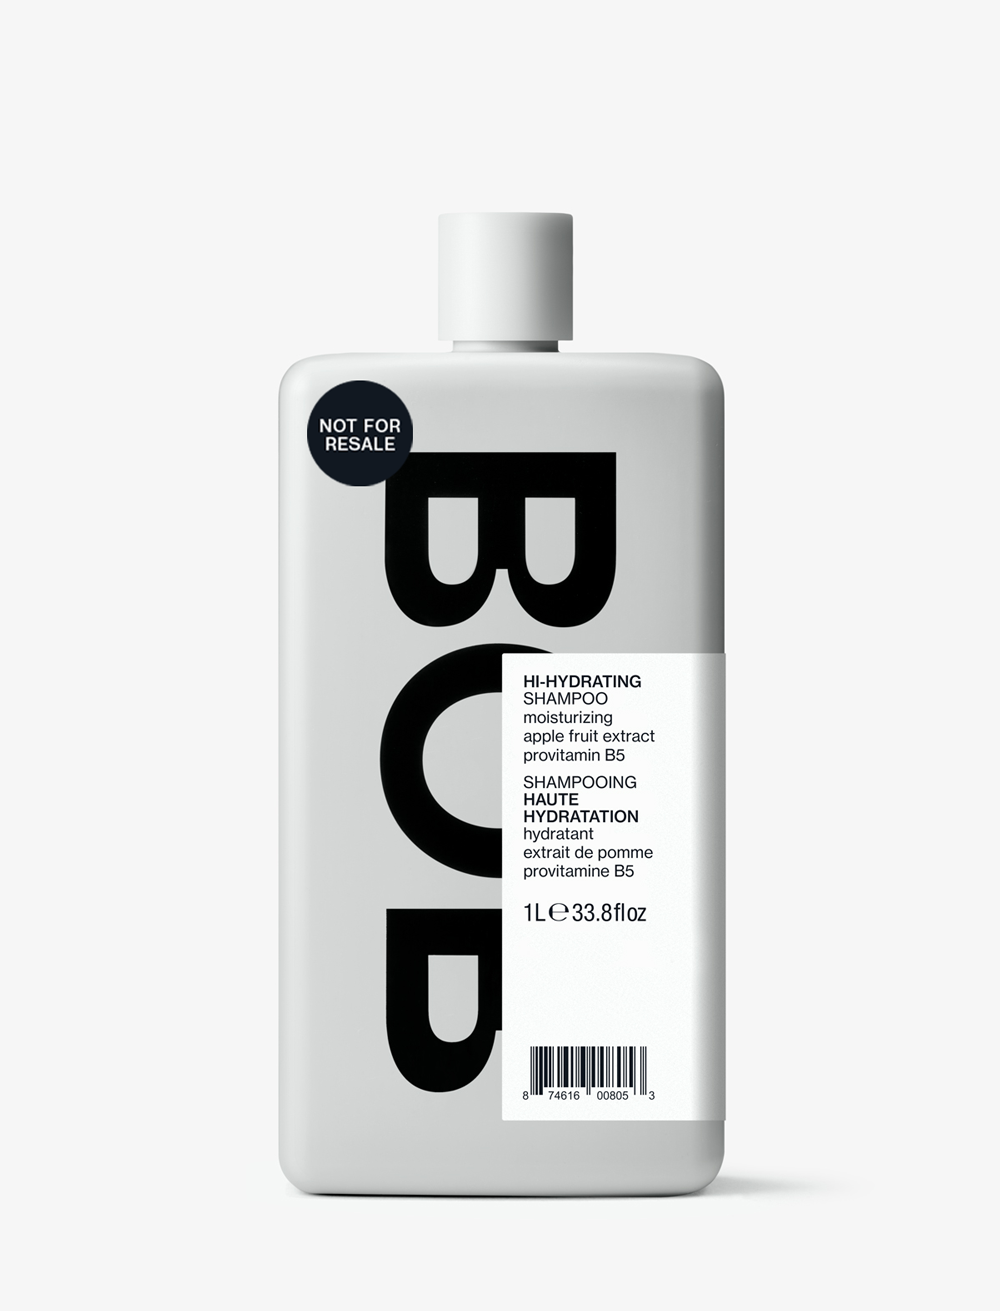 Hi-Hydrating Shampoo 1L BBAR